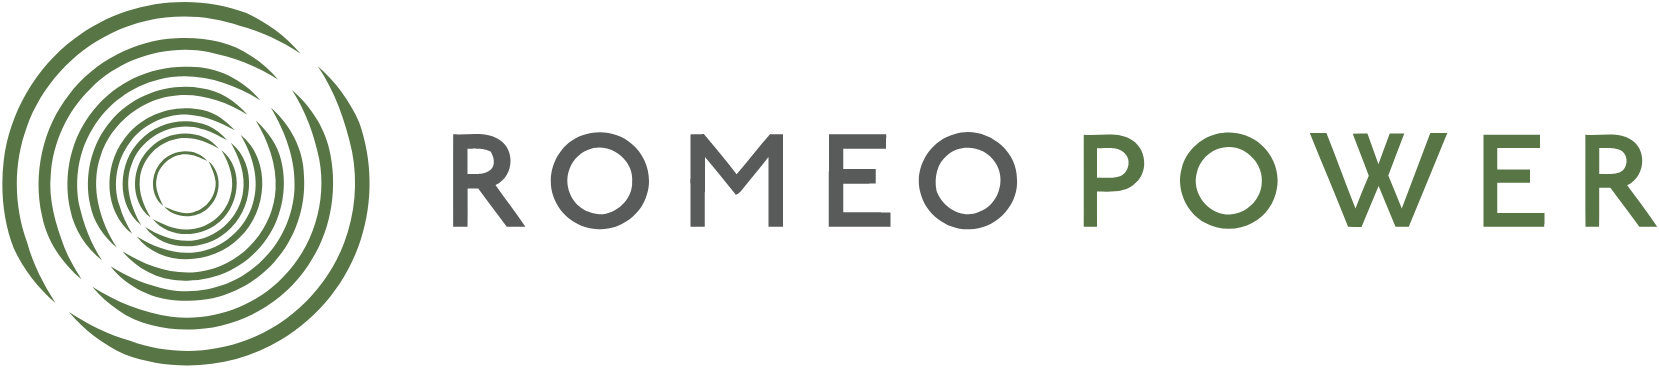 Romeo Power logo large (transparent PNG)